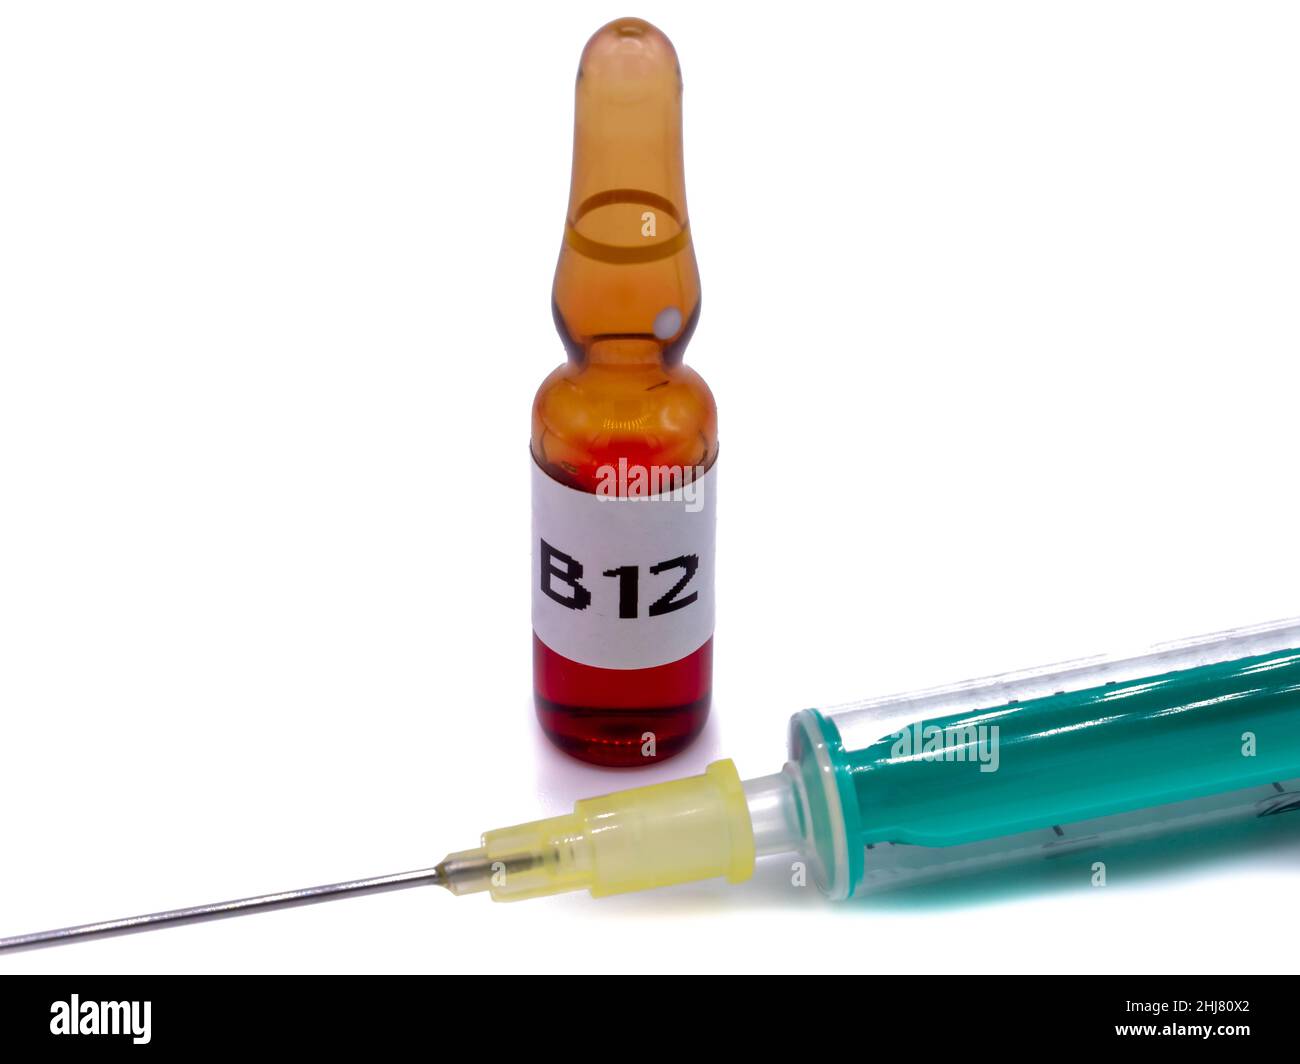 B12 ampoule with syringe isolated Stock Photo